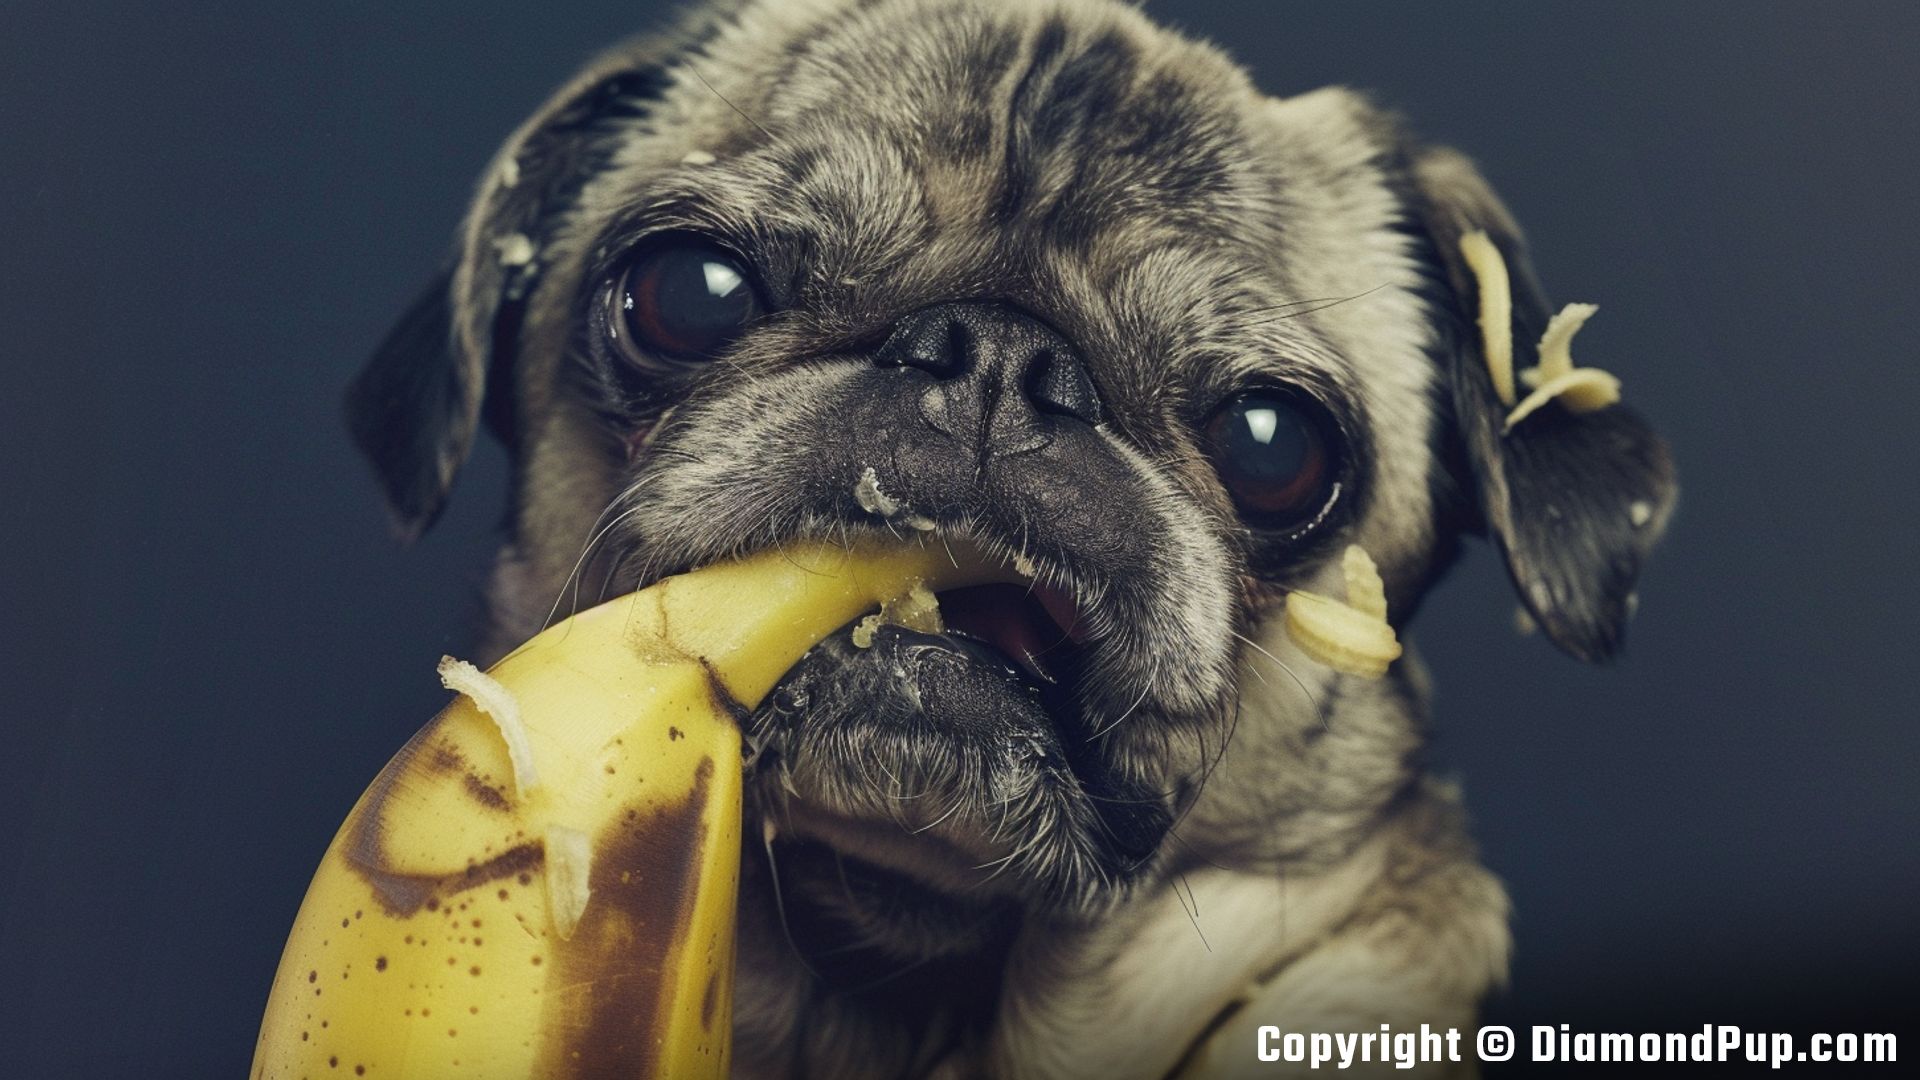 Photo of a Cute Pug Eating Banana